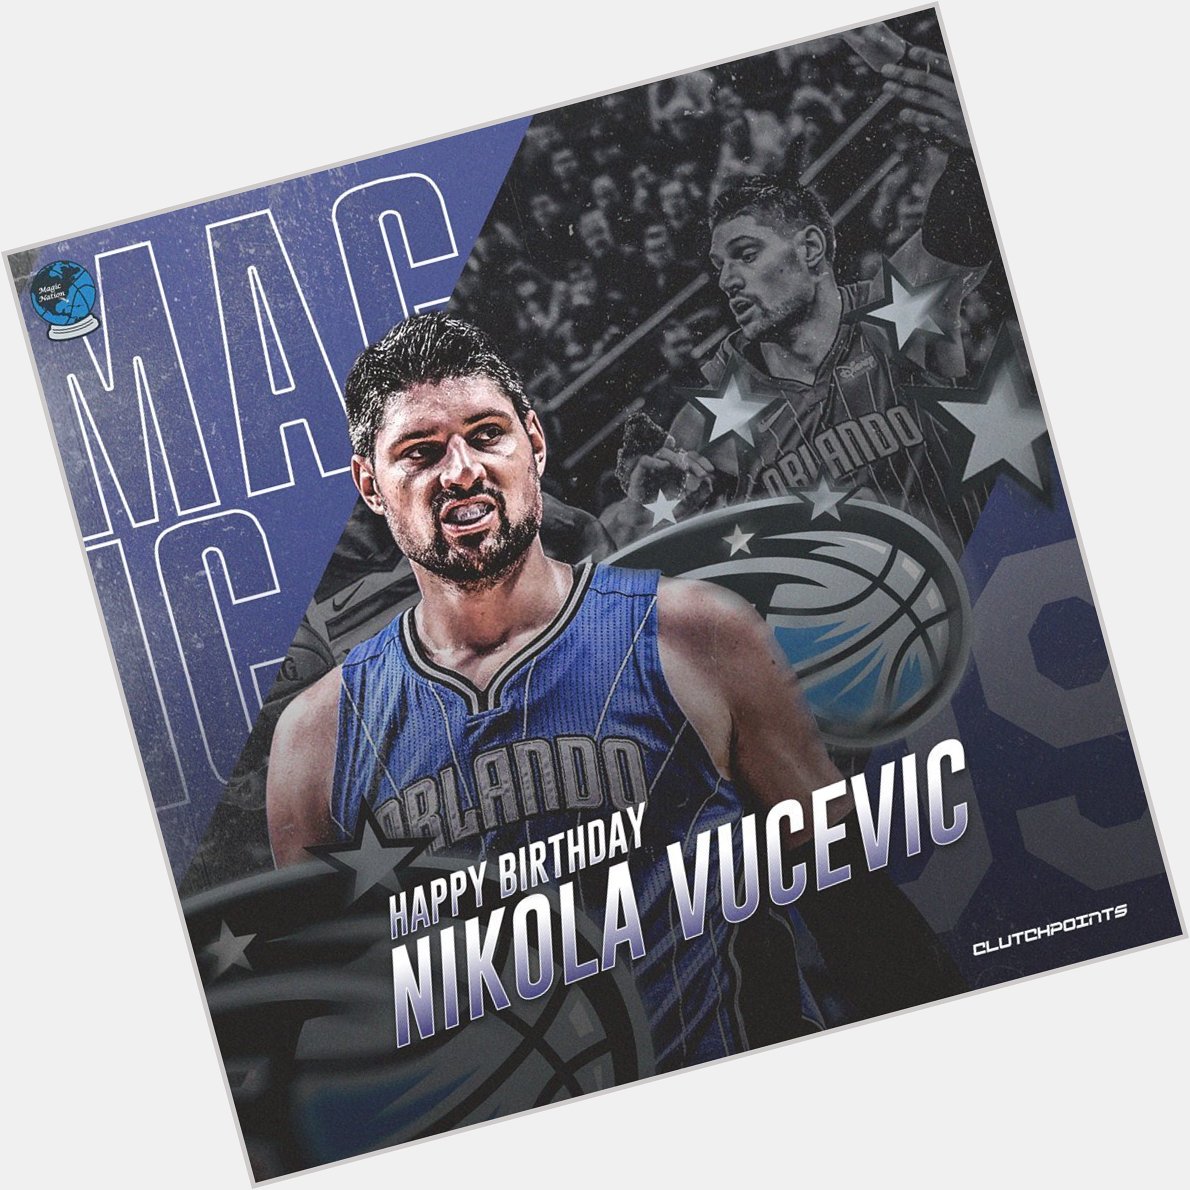 Join Magic Nation in wishing Nikola Vucevic a happy 28th birthday  